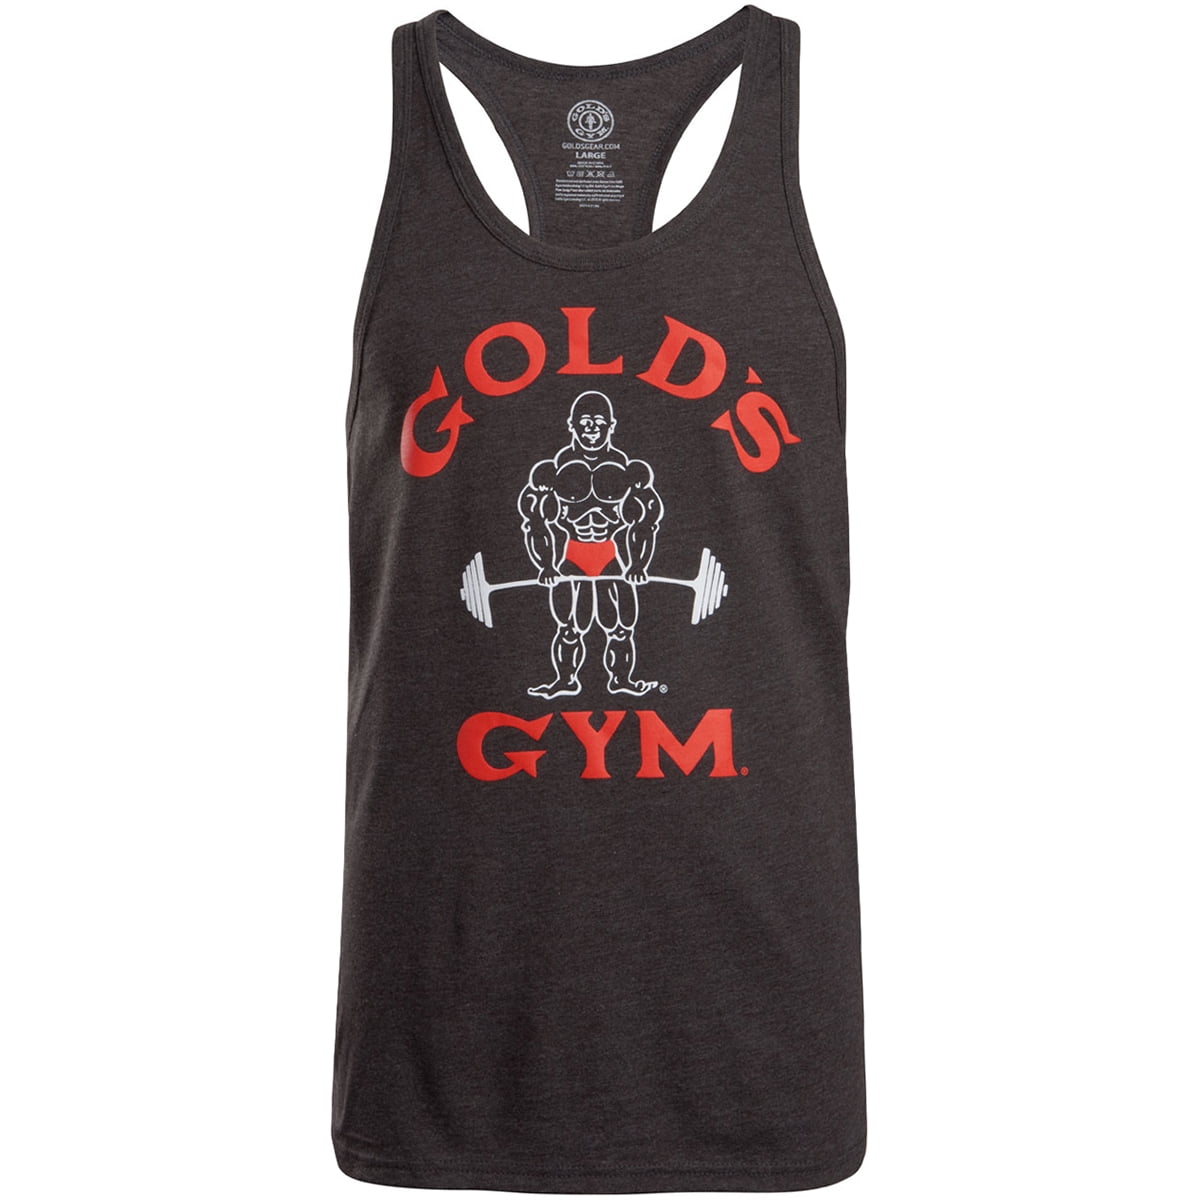 Gold's Gym - Gold's Gym Classic Joe Stringer Tank Top - Dark Gray ...